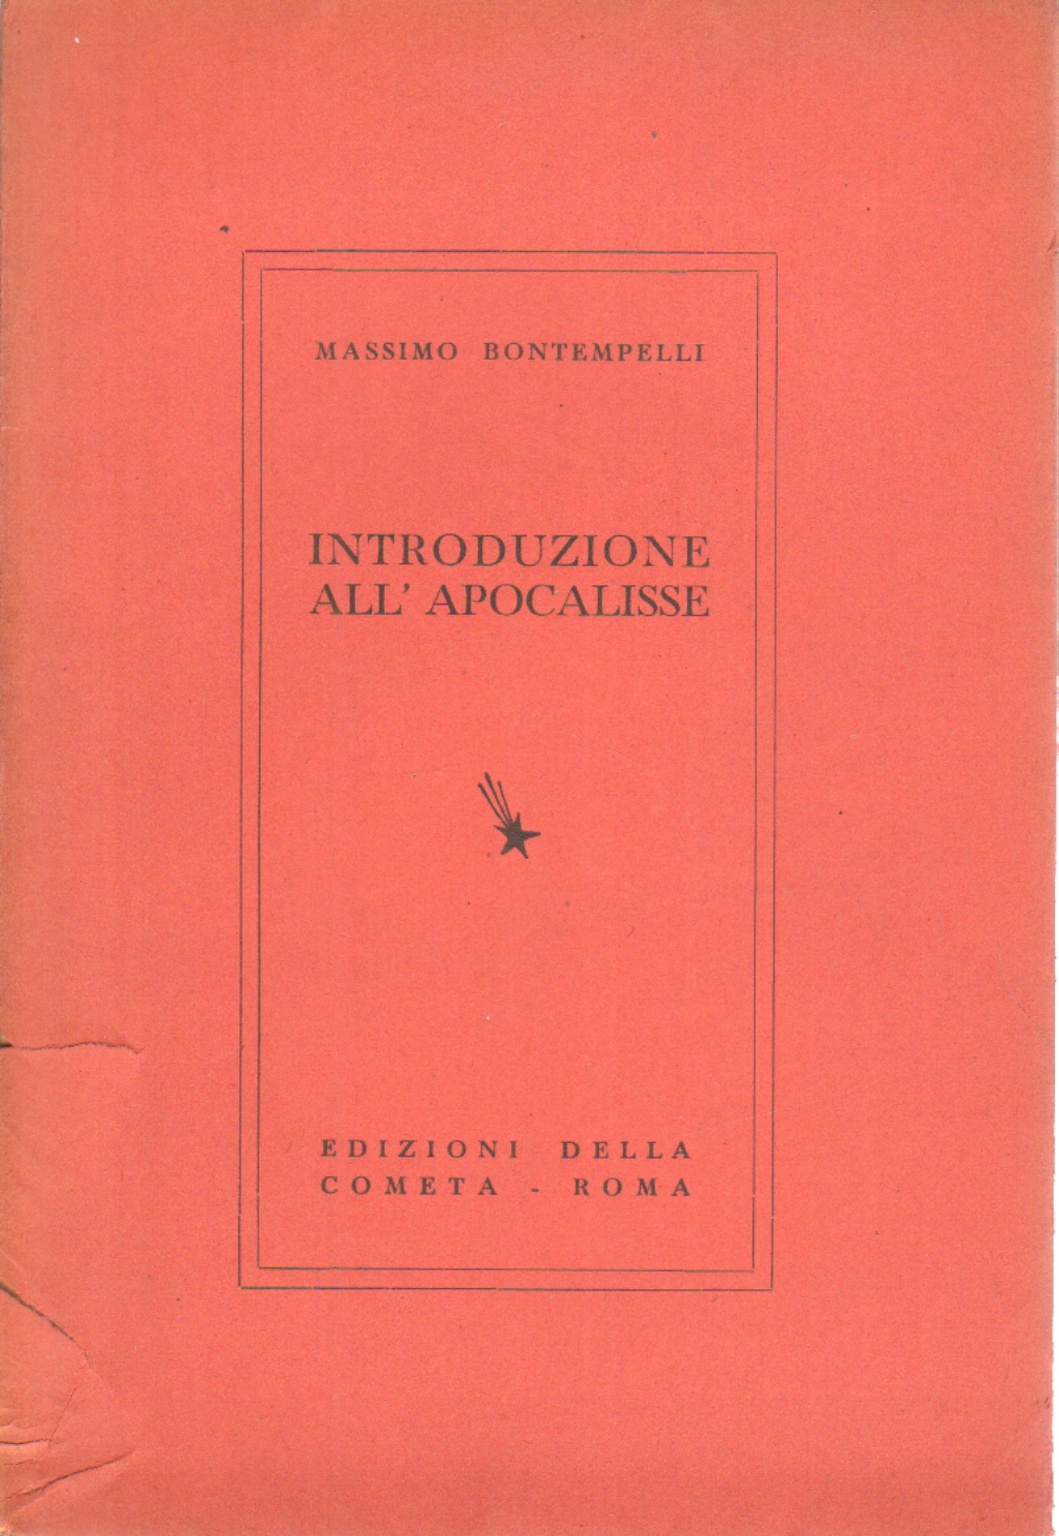 Introduzione all'Apocalisse, Massimo Bontempelli